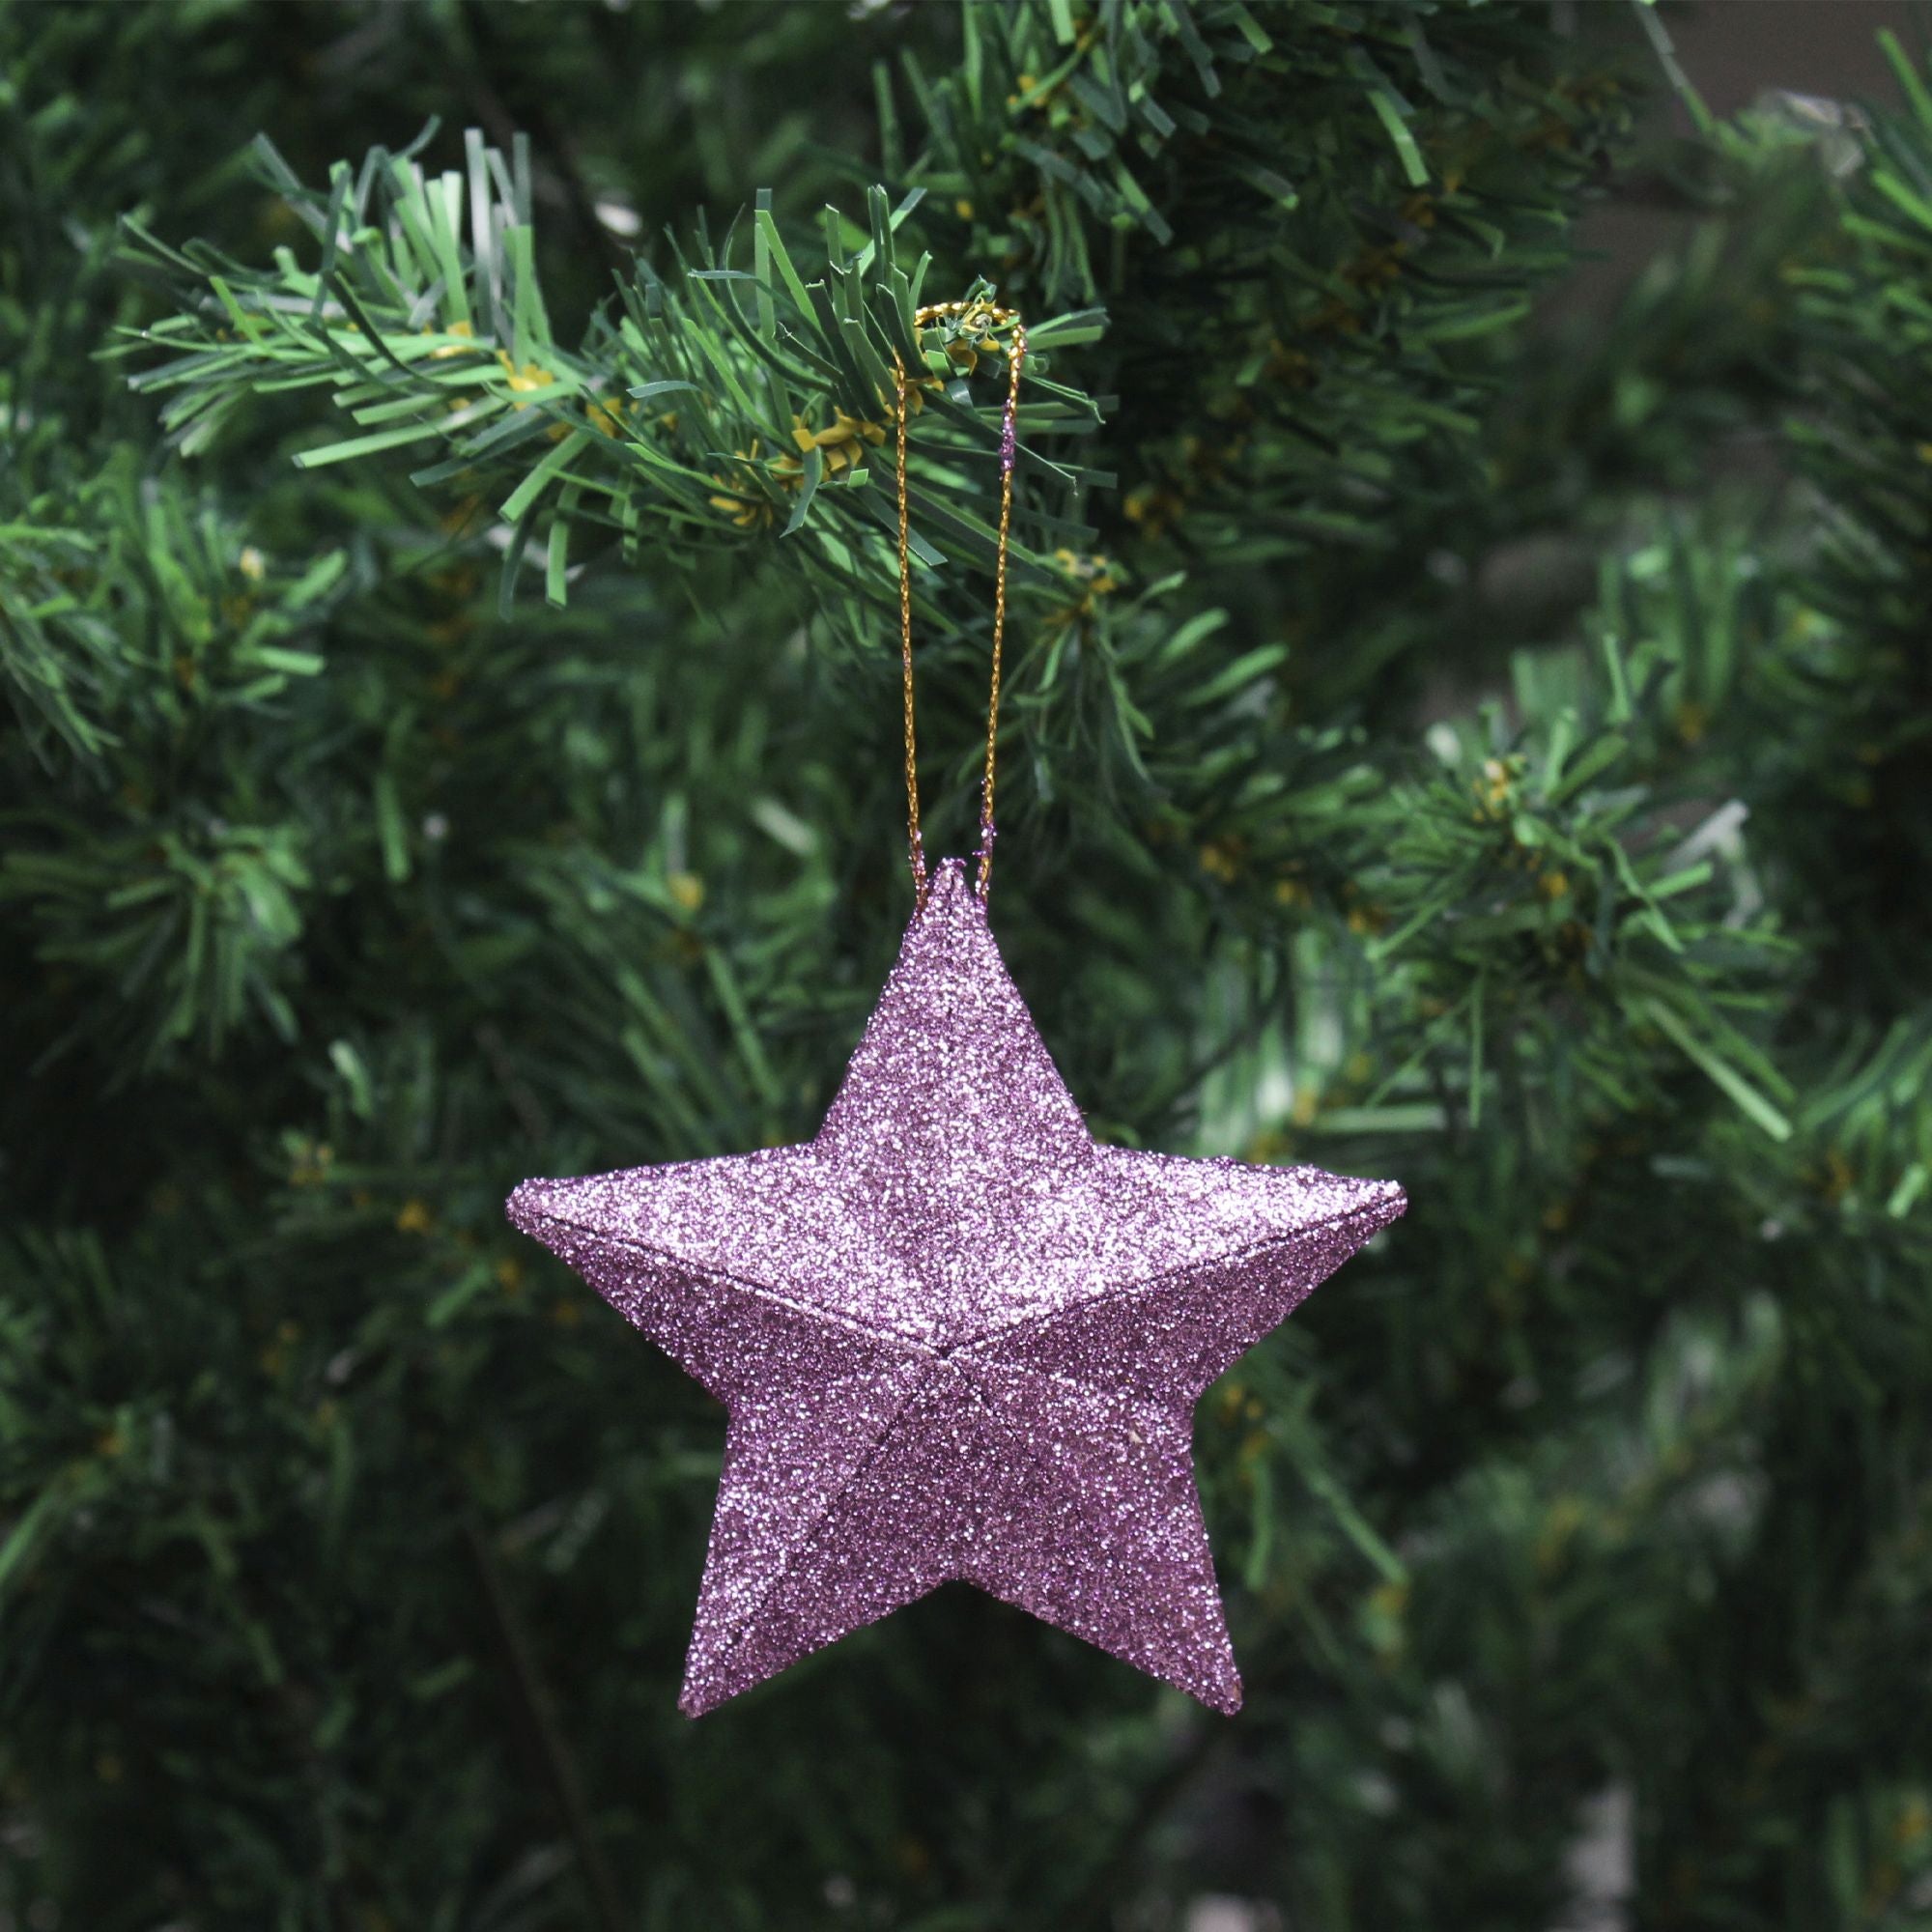 Handmade Christmas Ornaments - 3D Glitter Stars, 3.25inch, Purple, 4pc